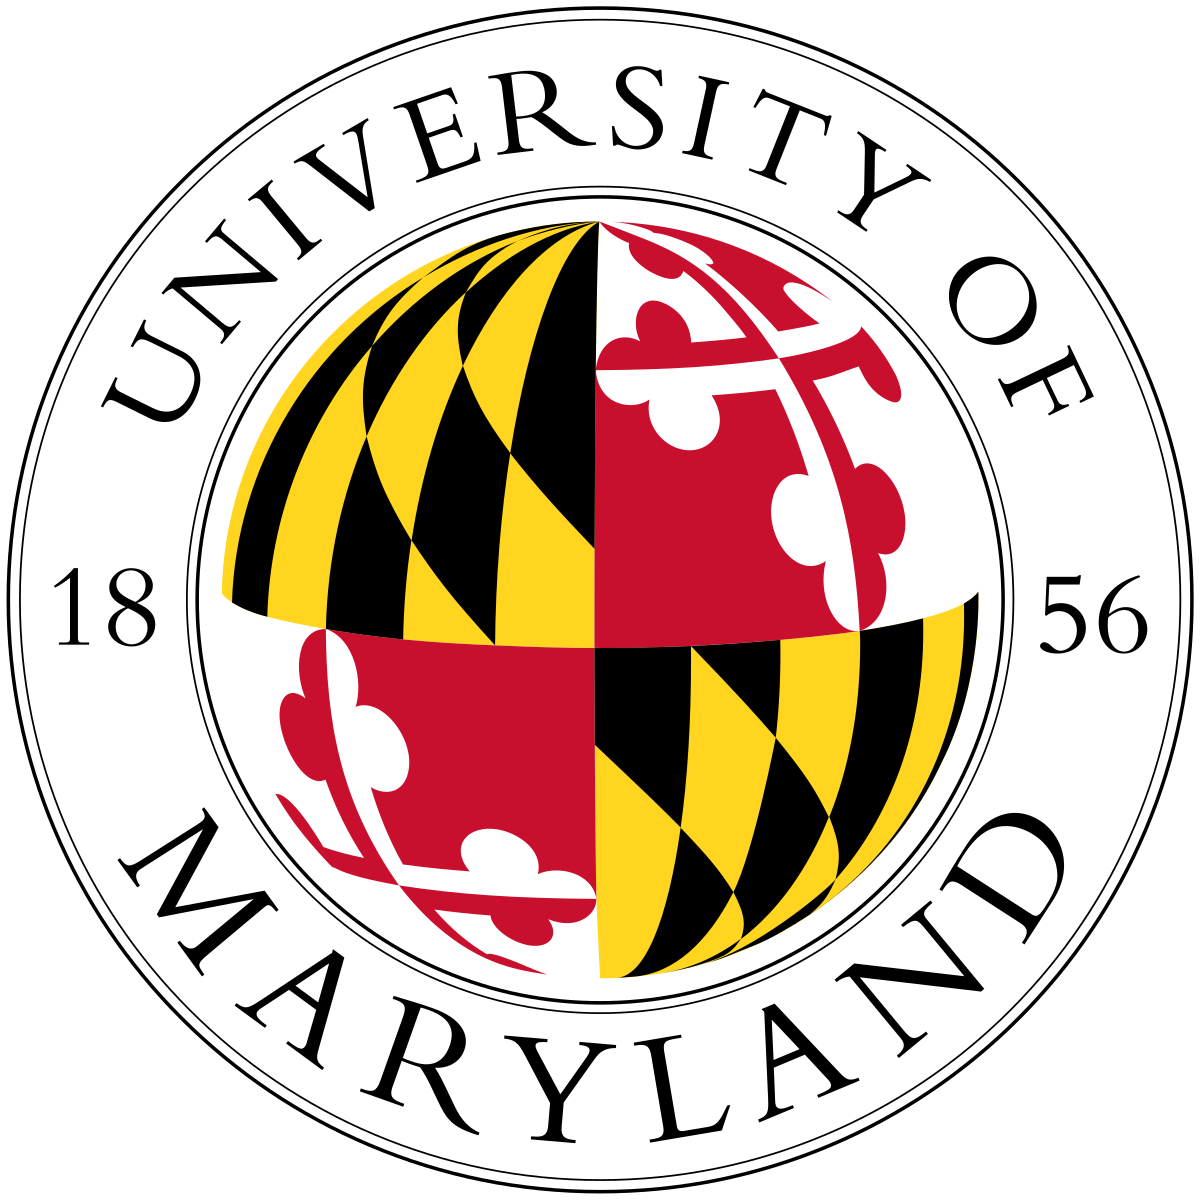 University of Maryland Certificate